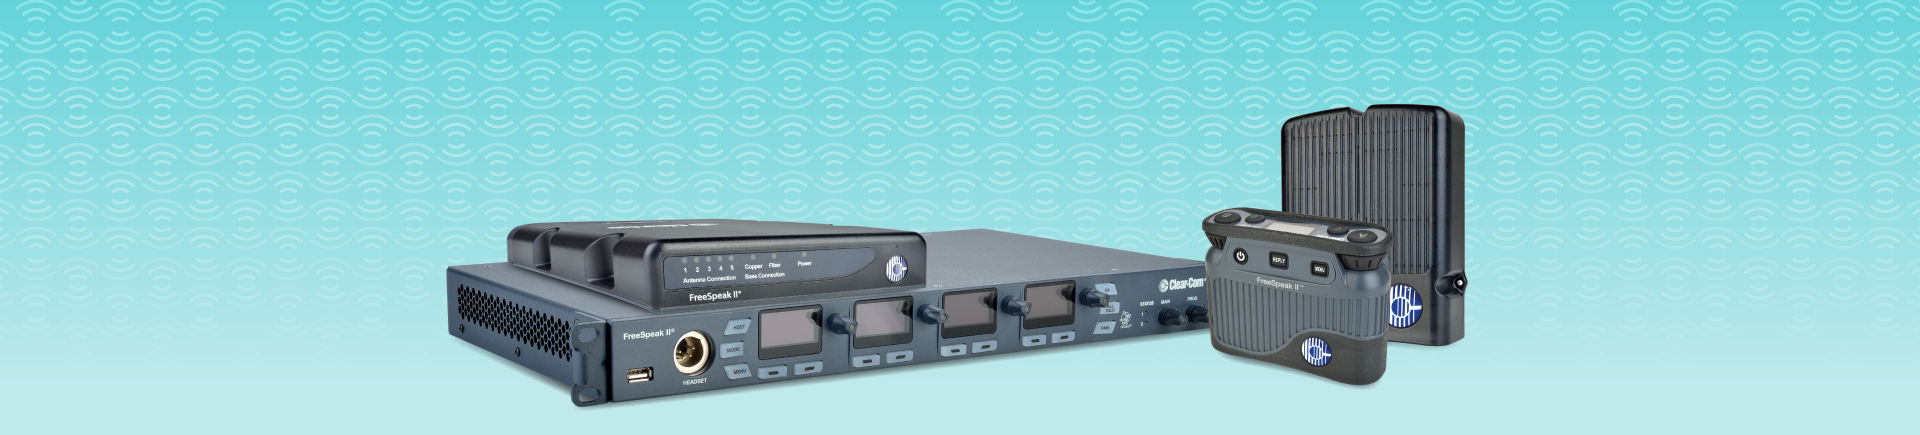 Clear-Com ICS-92 Matrix Plus Master 9-Key Display Station Intercom System TESTED 